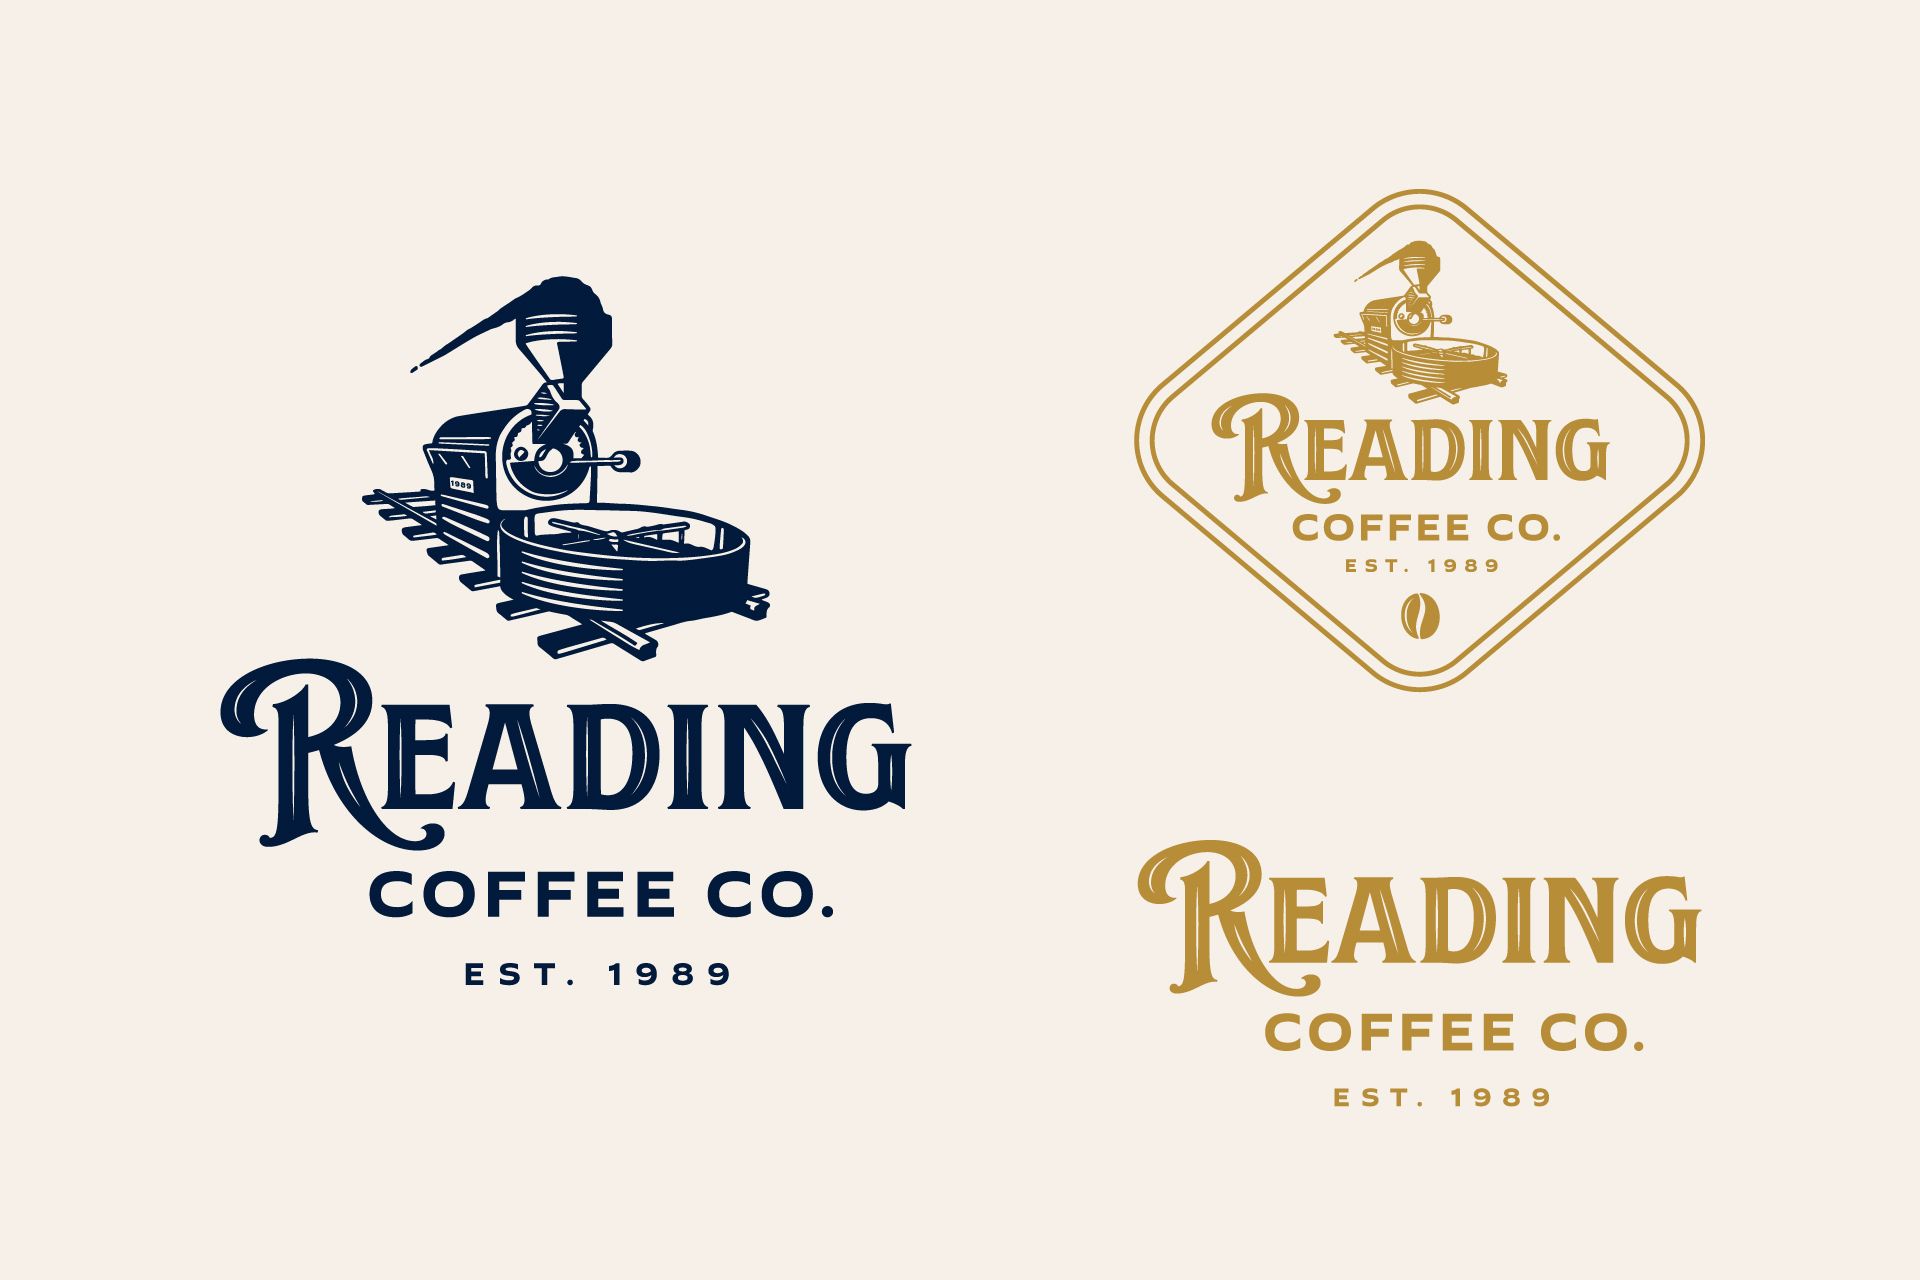 Reading Coffee Company Primary Logos